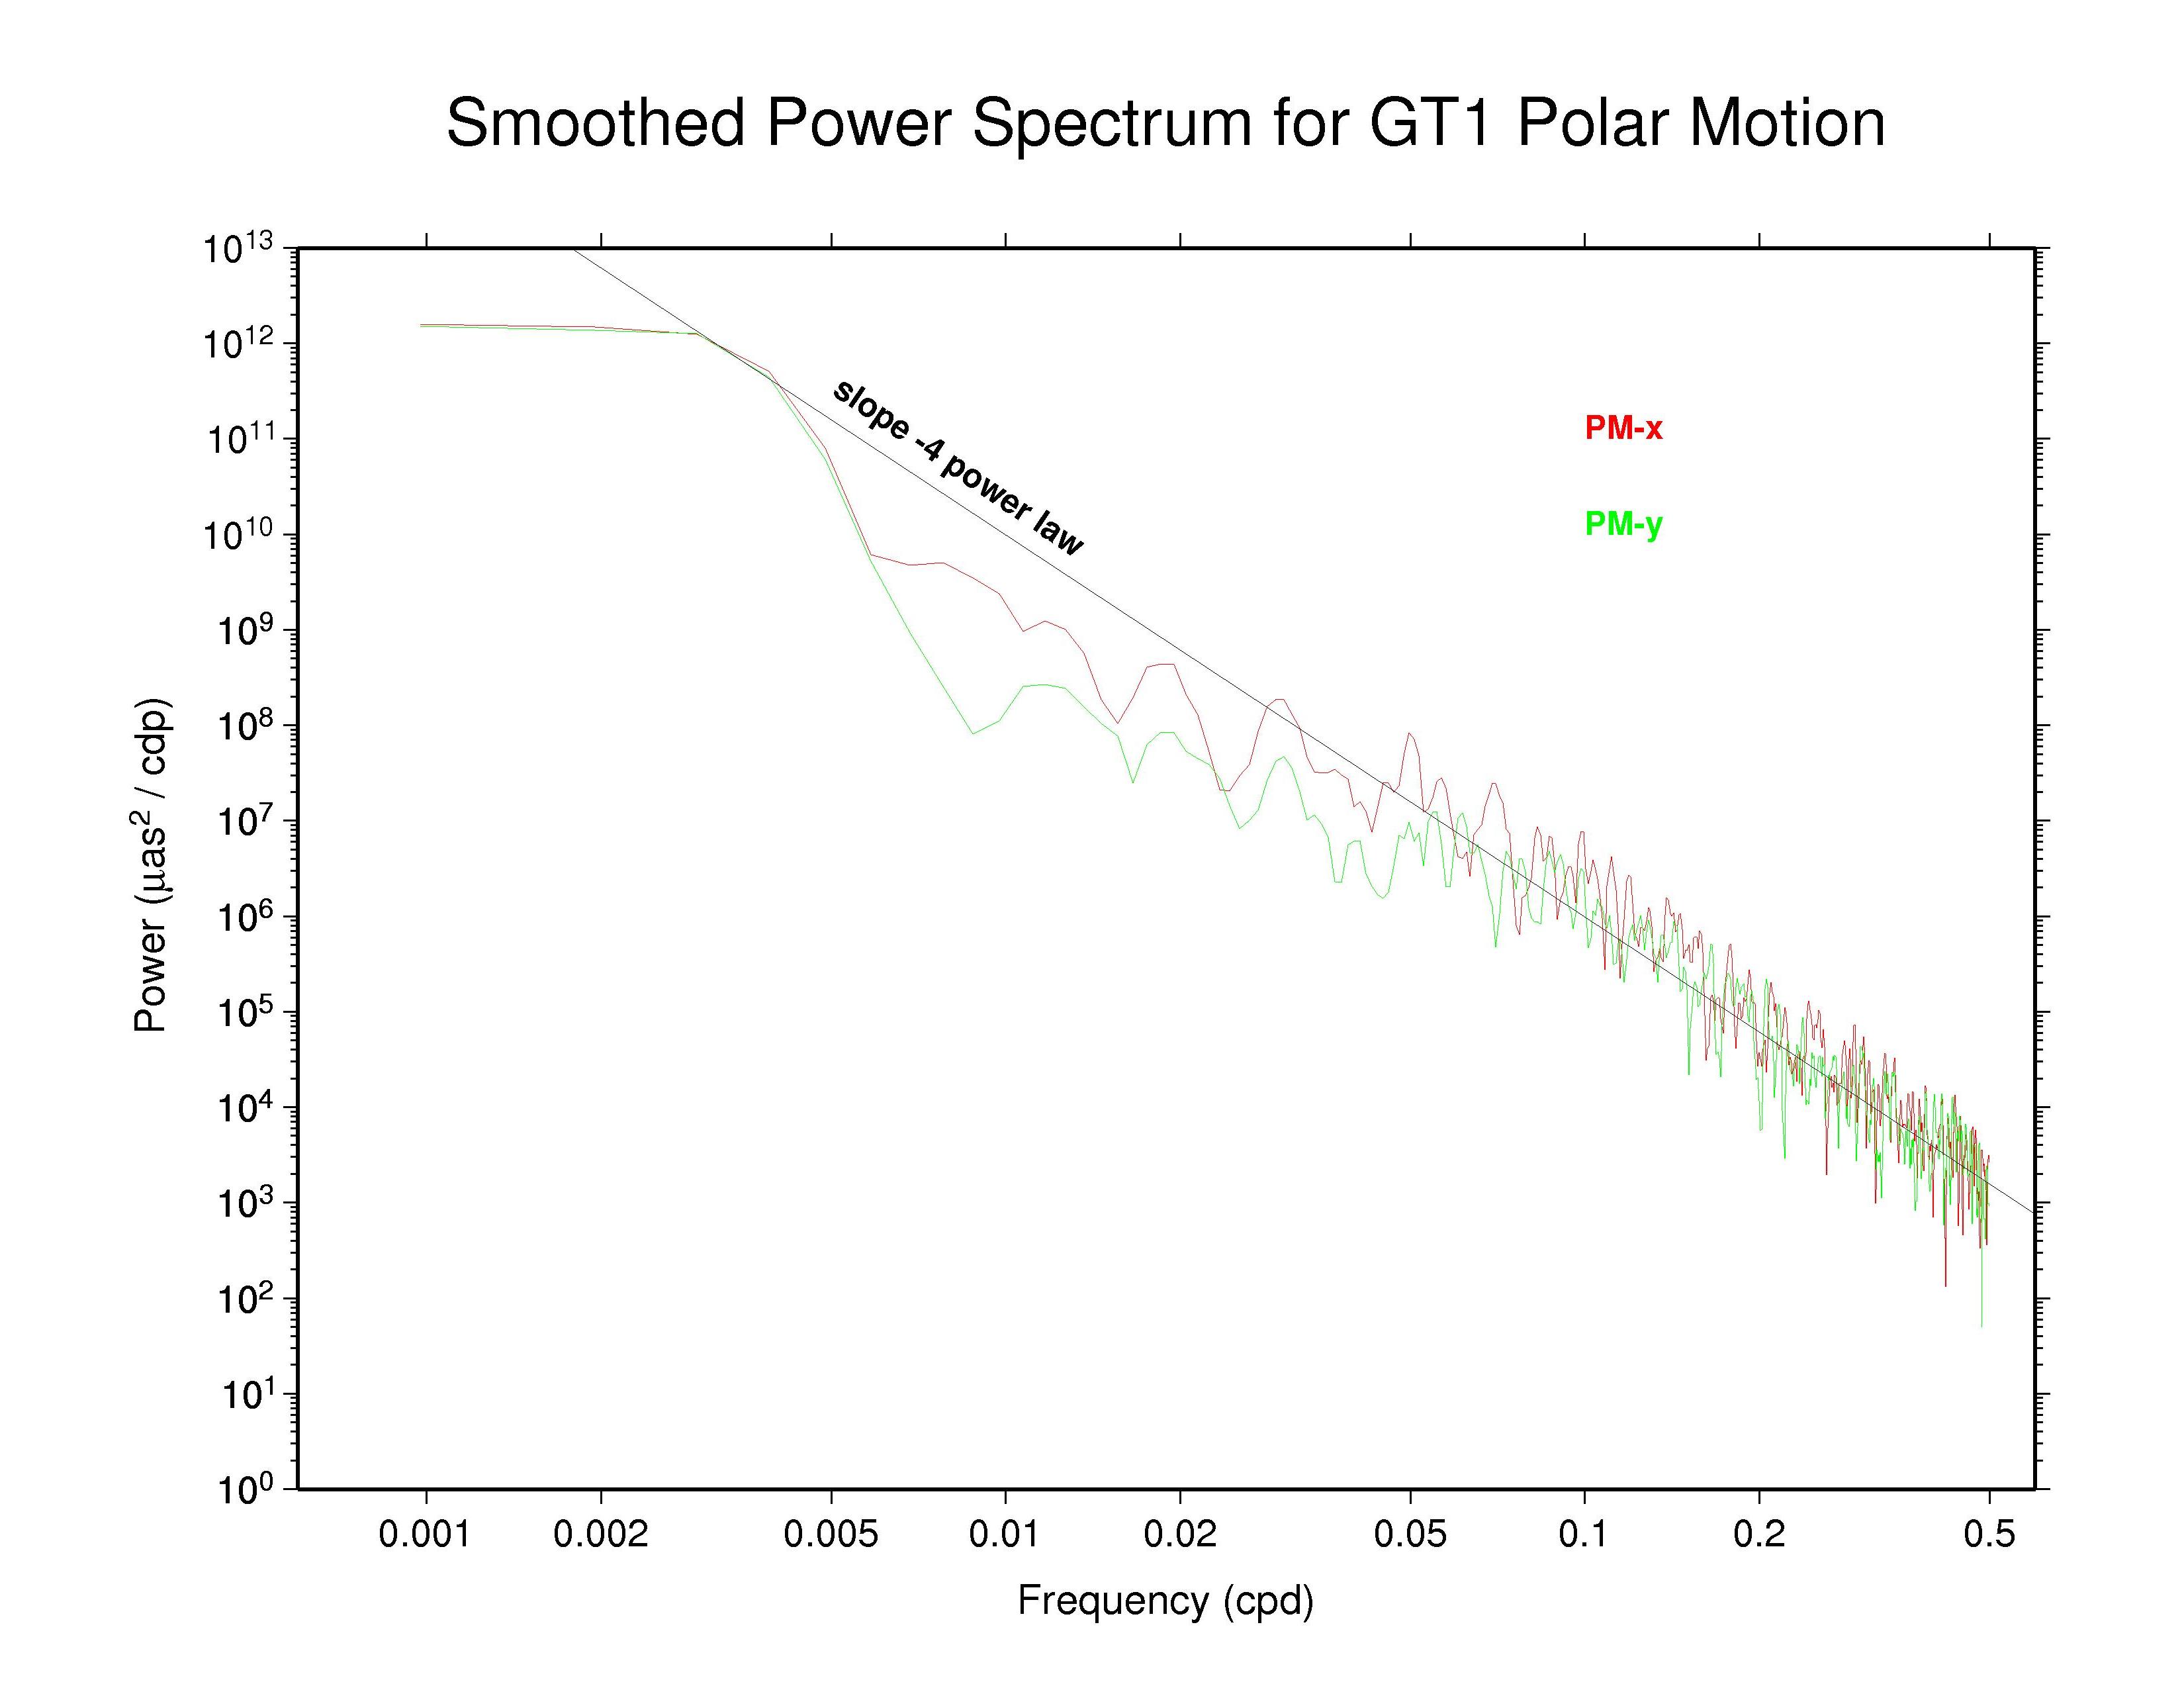 GTZ polar motion spectra